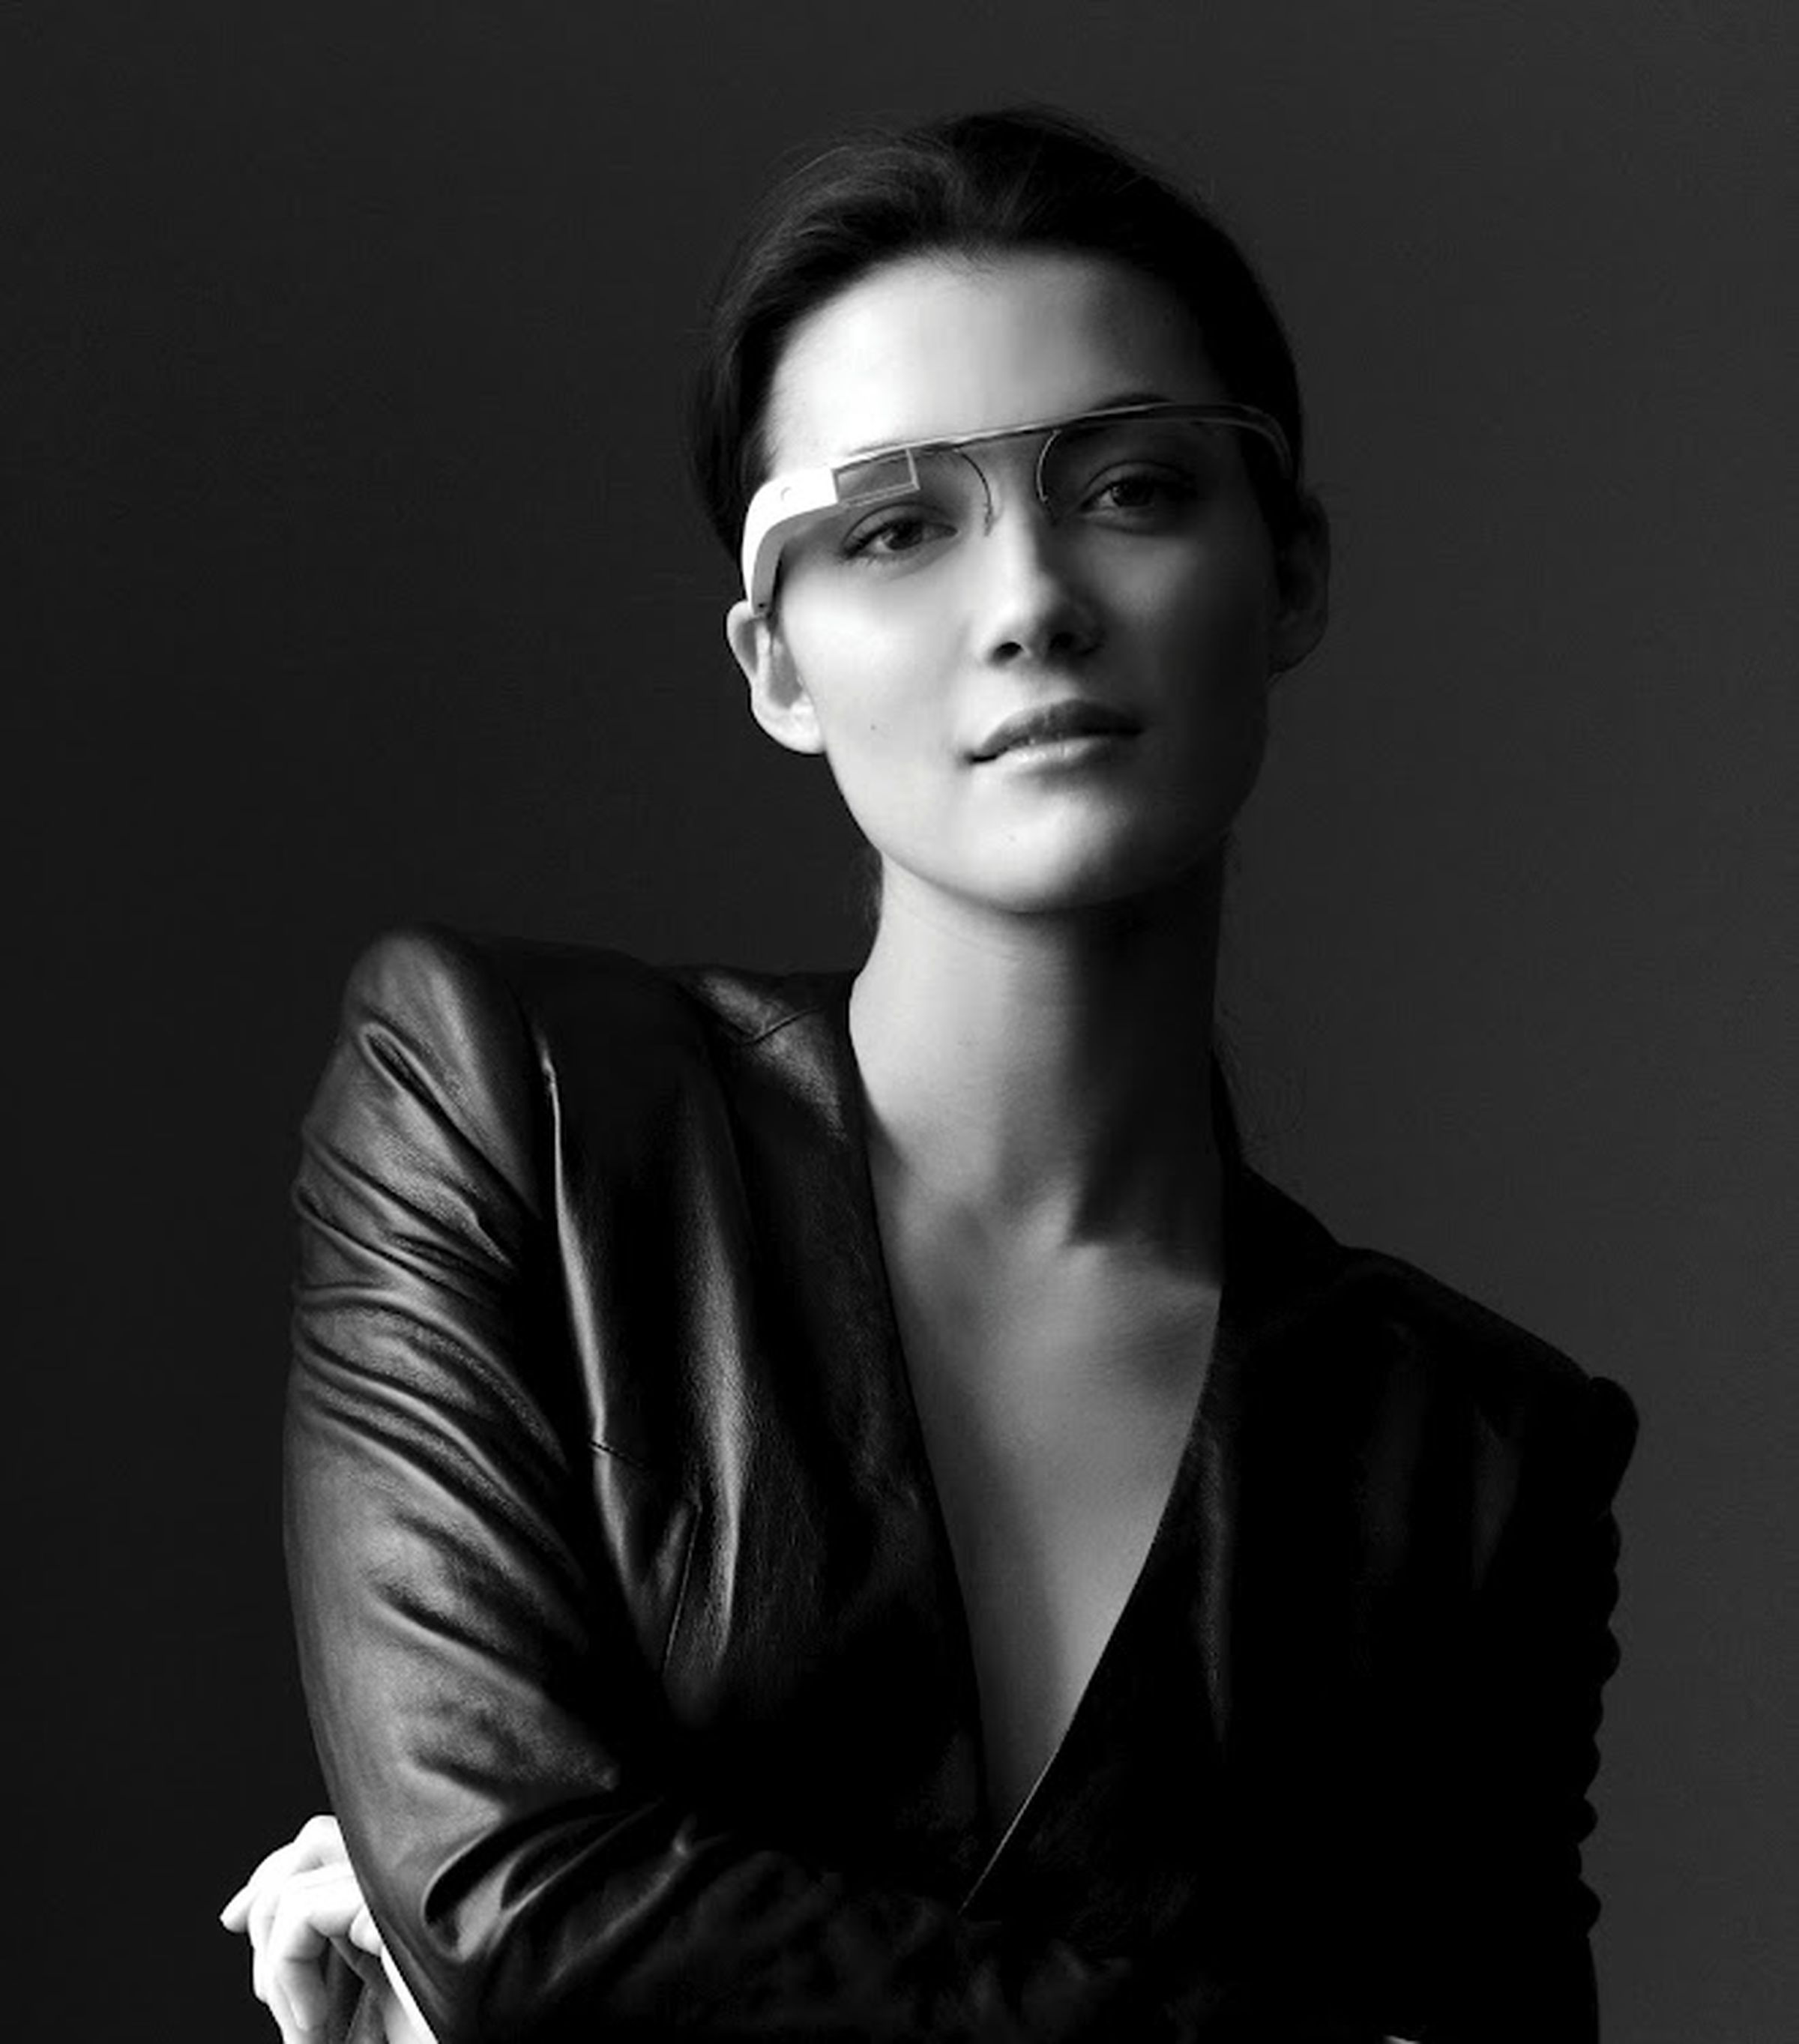 Google Project Glass press photos